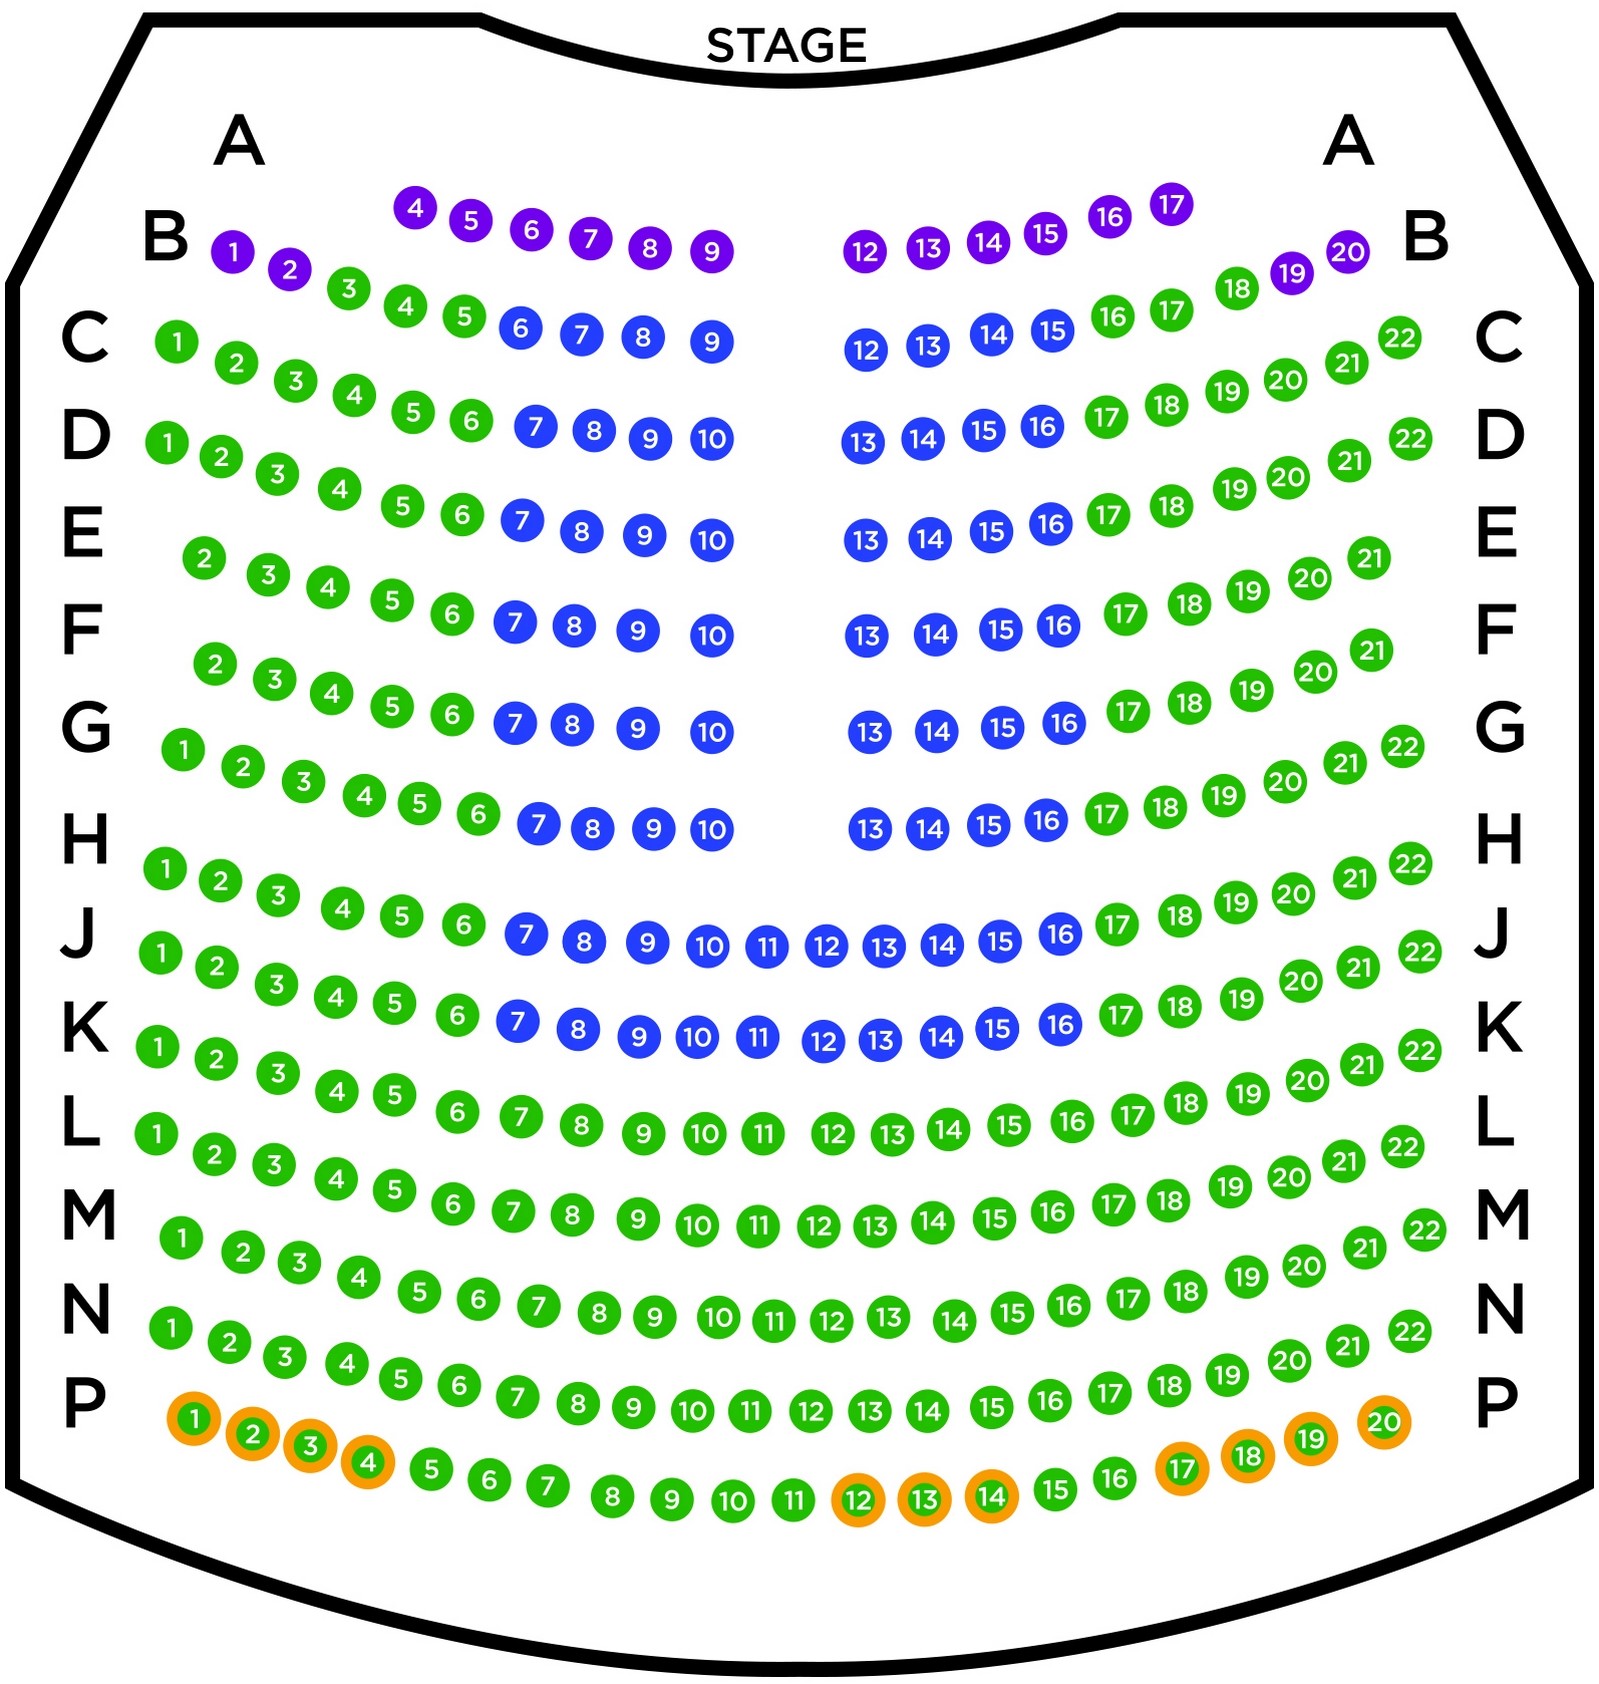 Halifax Metro Centre Seating Chart